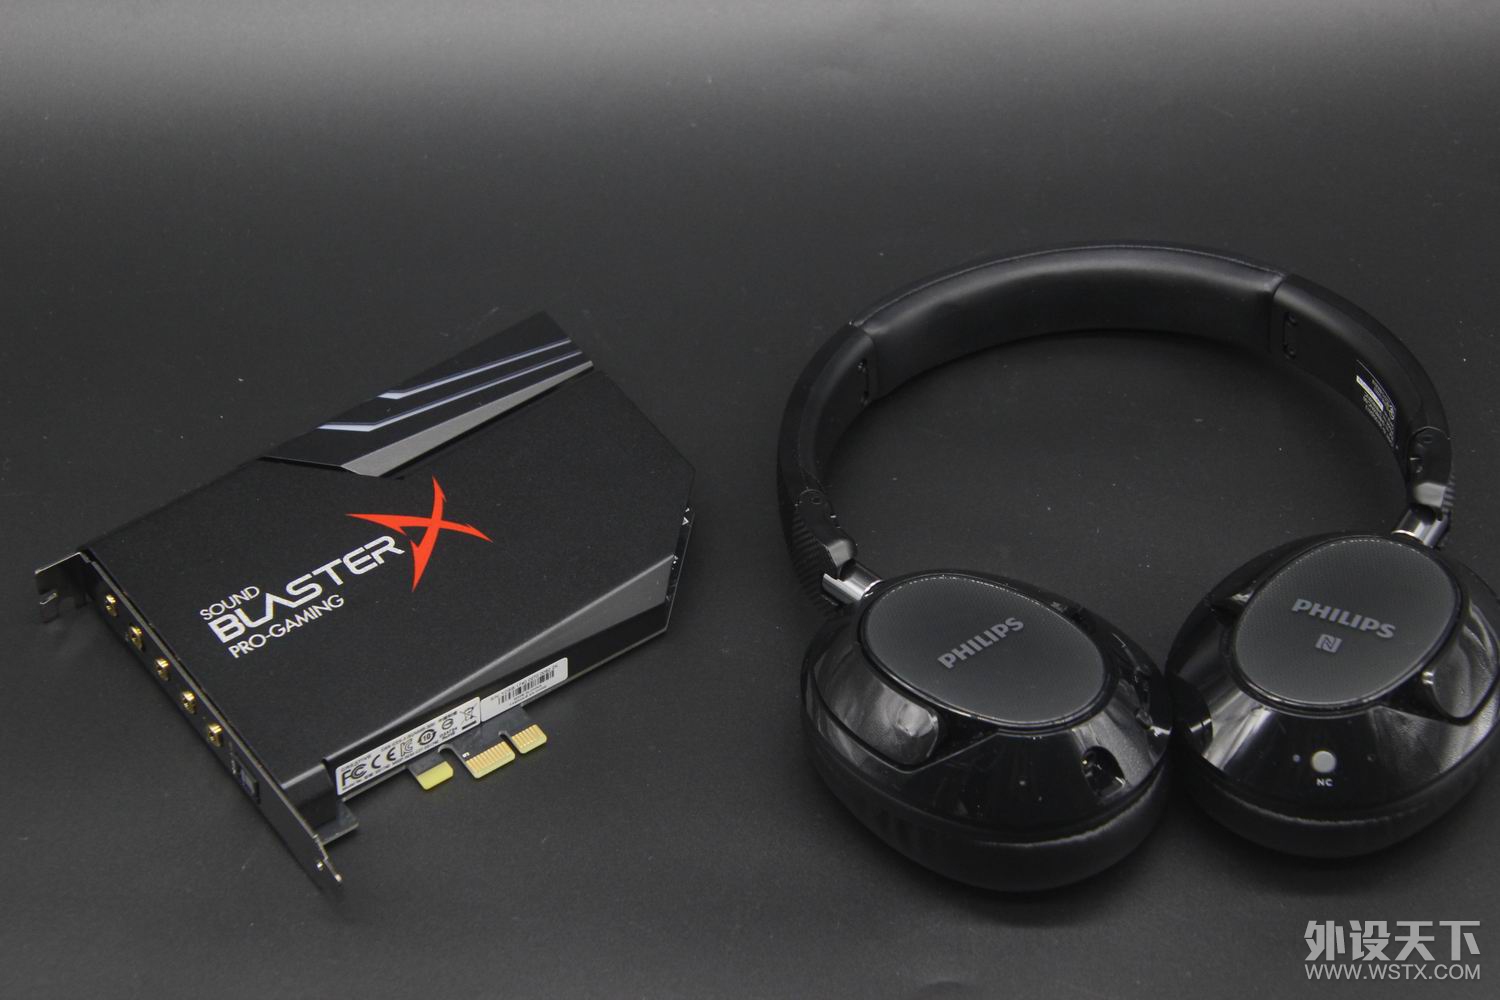  Sound BlasterX AE-5 Plus 